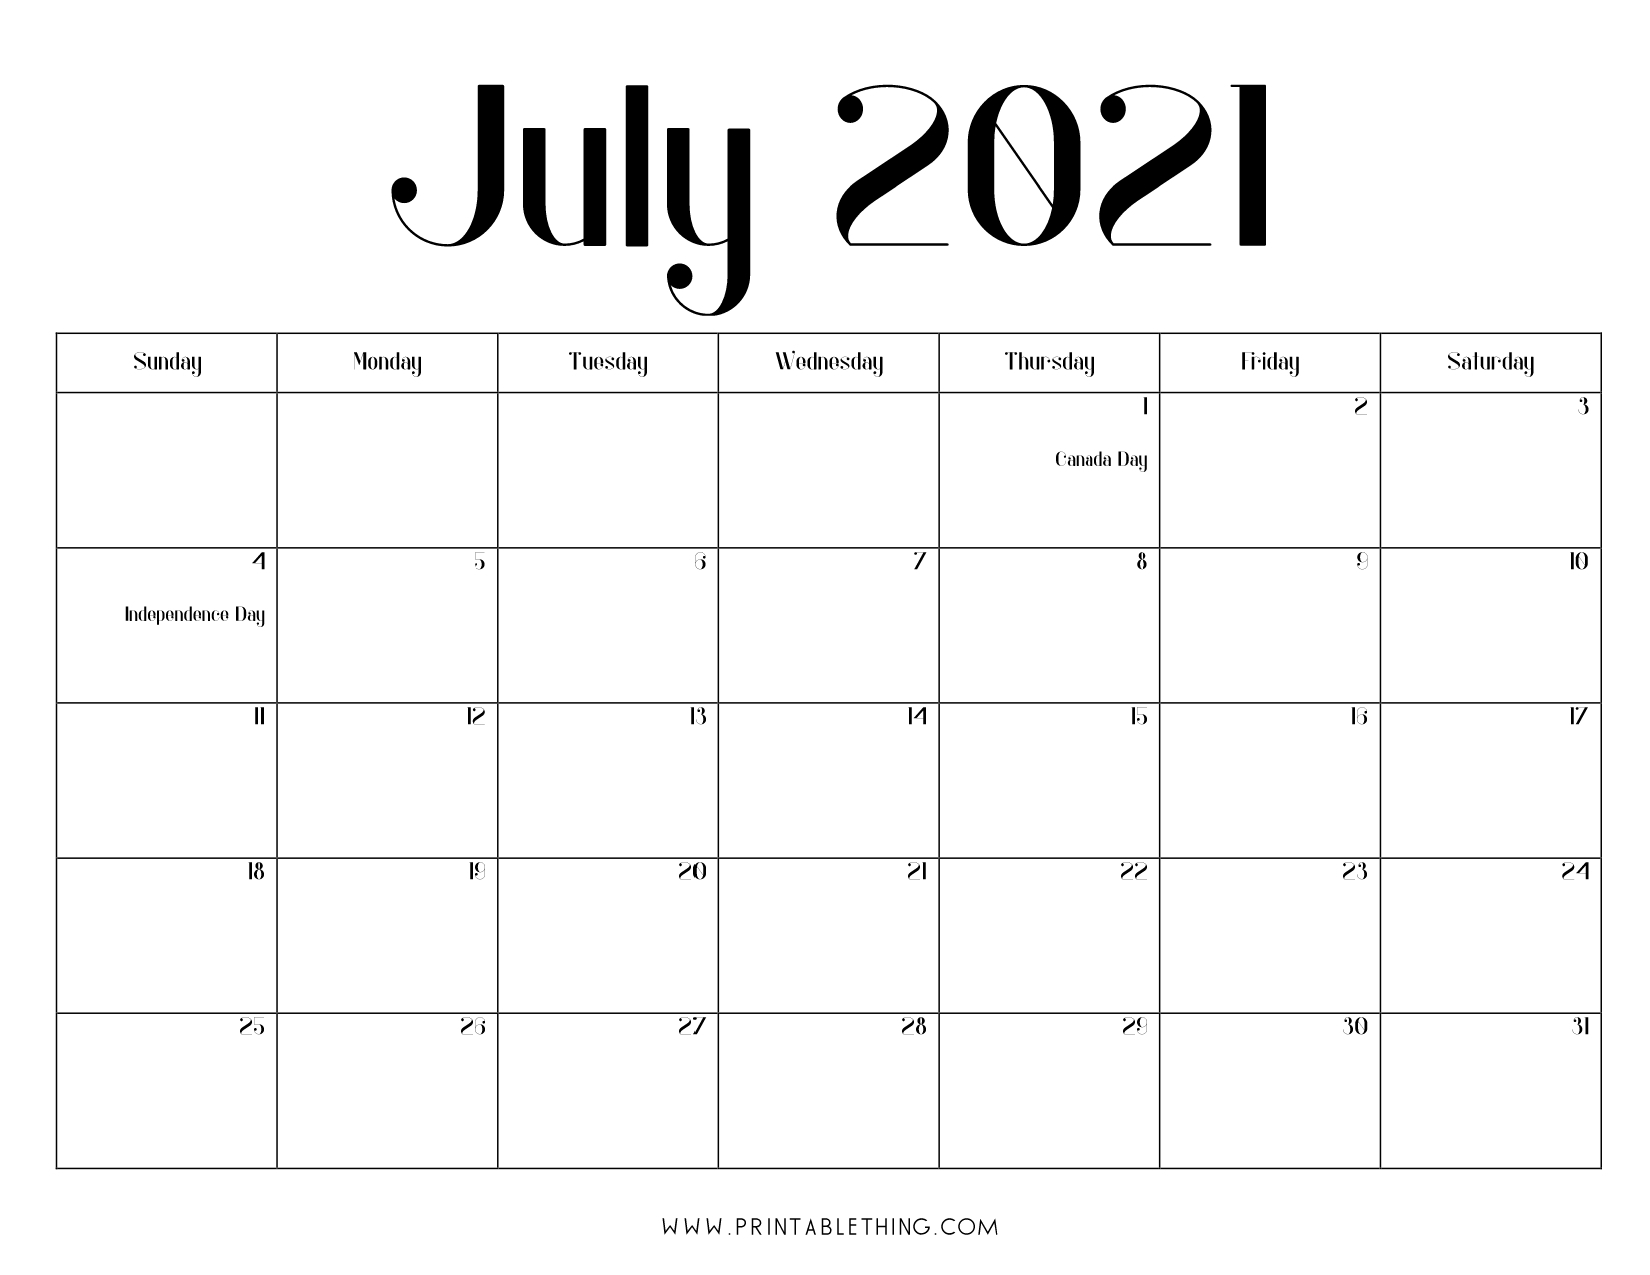 July 2021 Calendar Pdf, July 2021 Calendar Image, Print